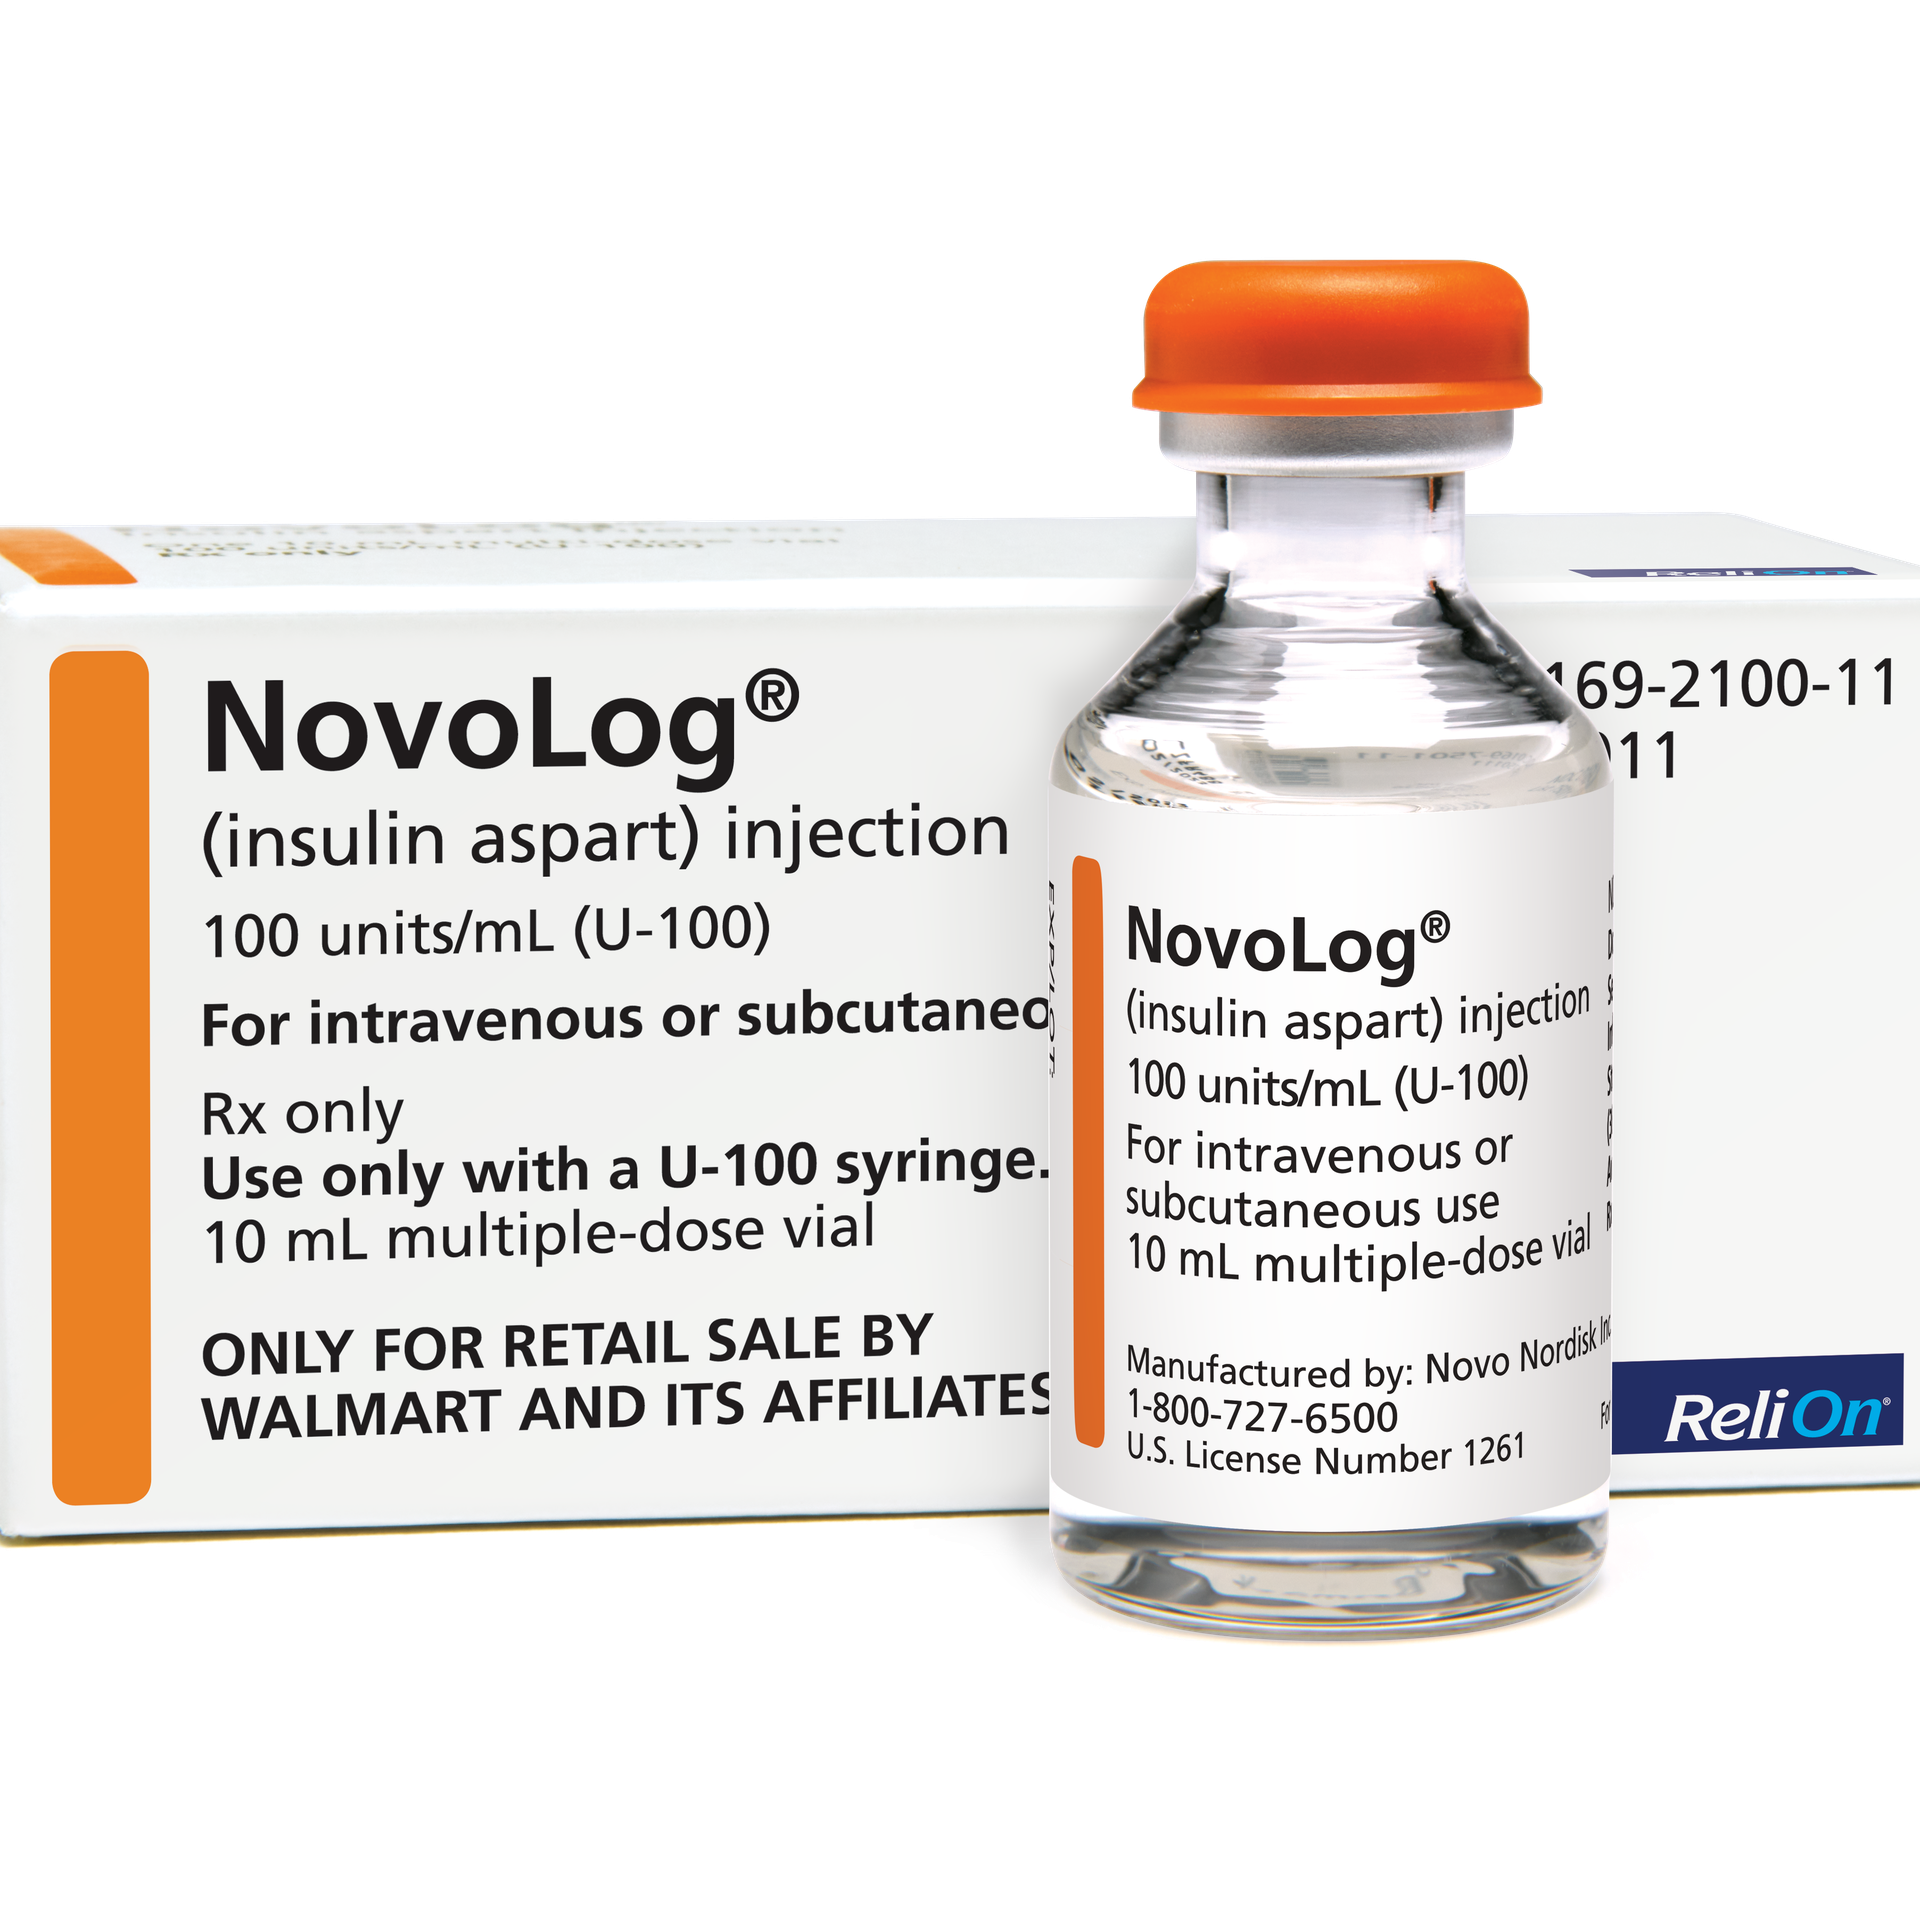 Walmart rolls out cash-pay Novo Nordisk insulin